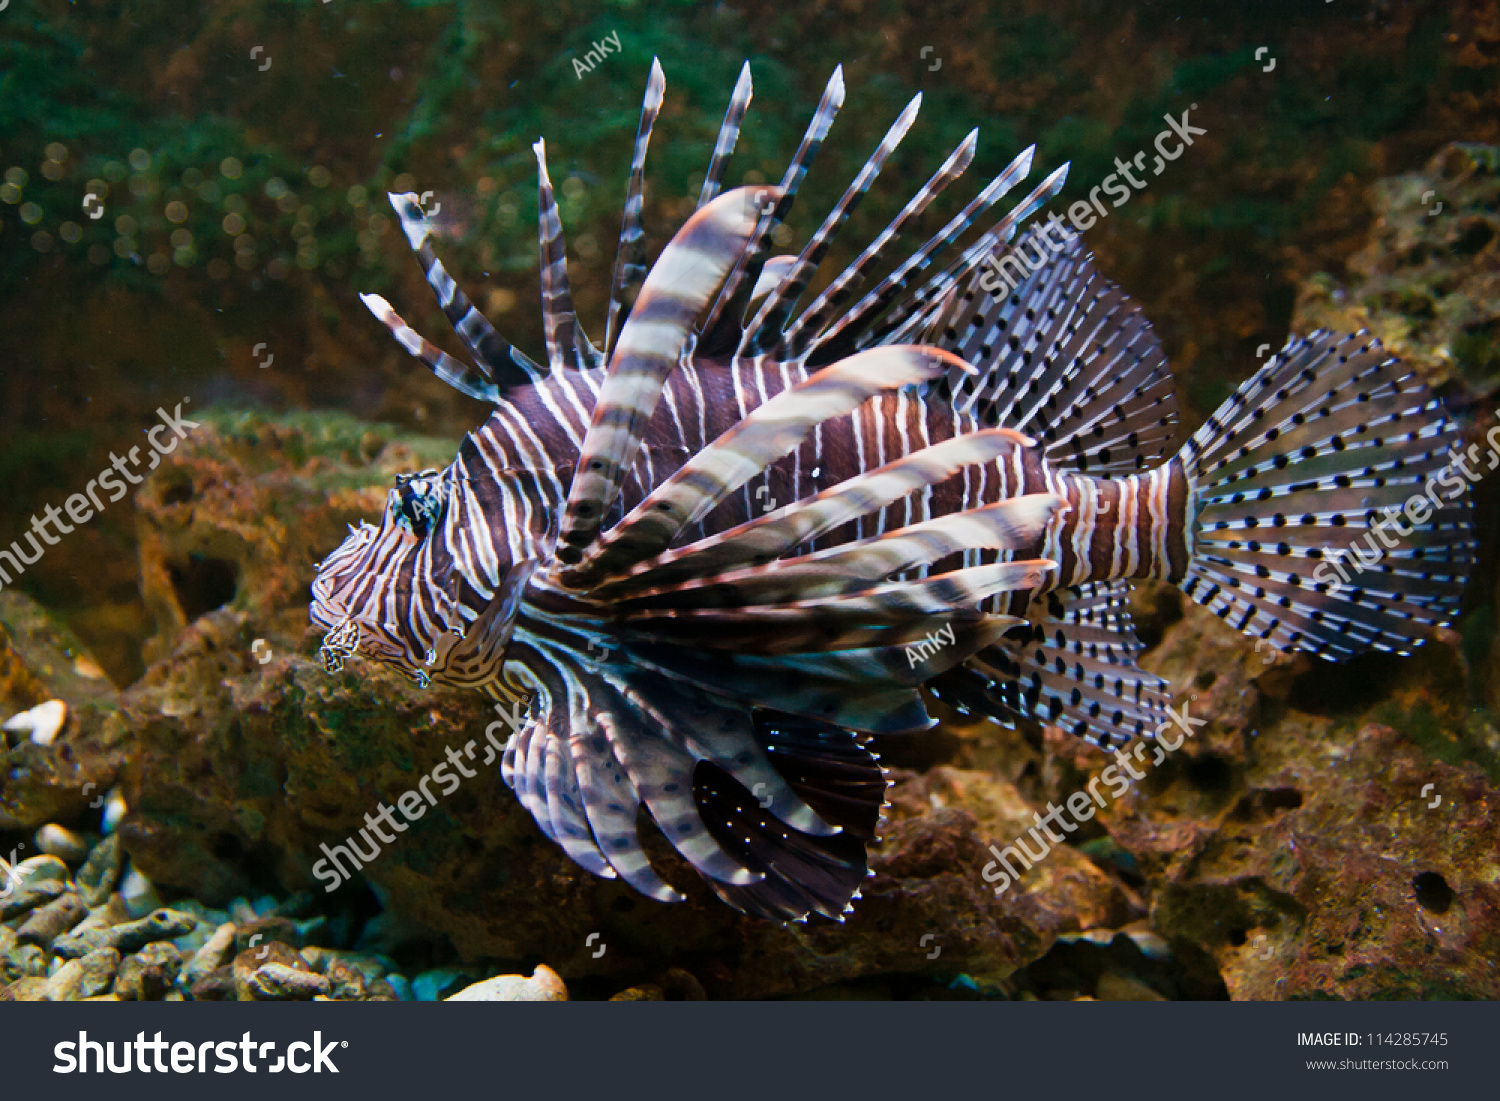 Red lionfish (Pterois volitans) aquarium fish, a venomous coral reef fish #114285745